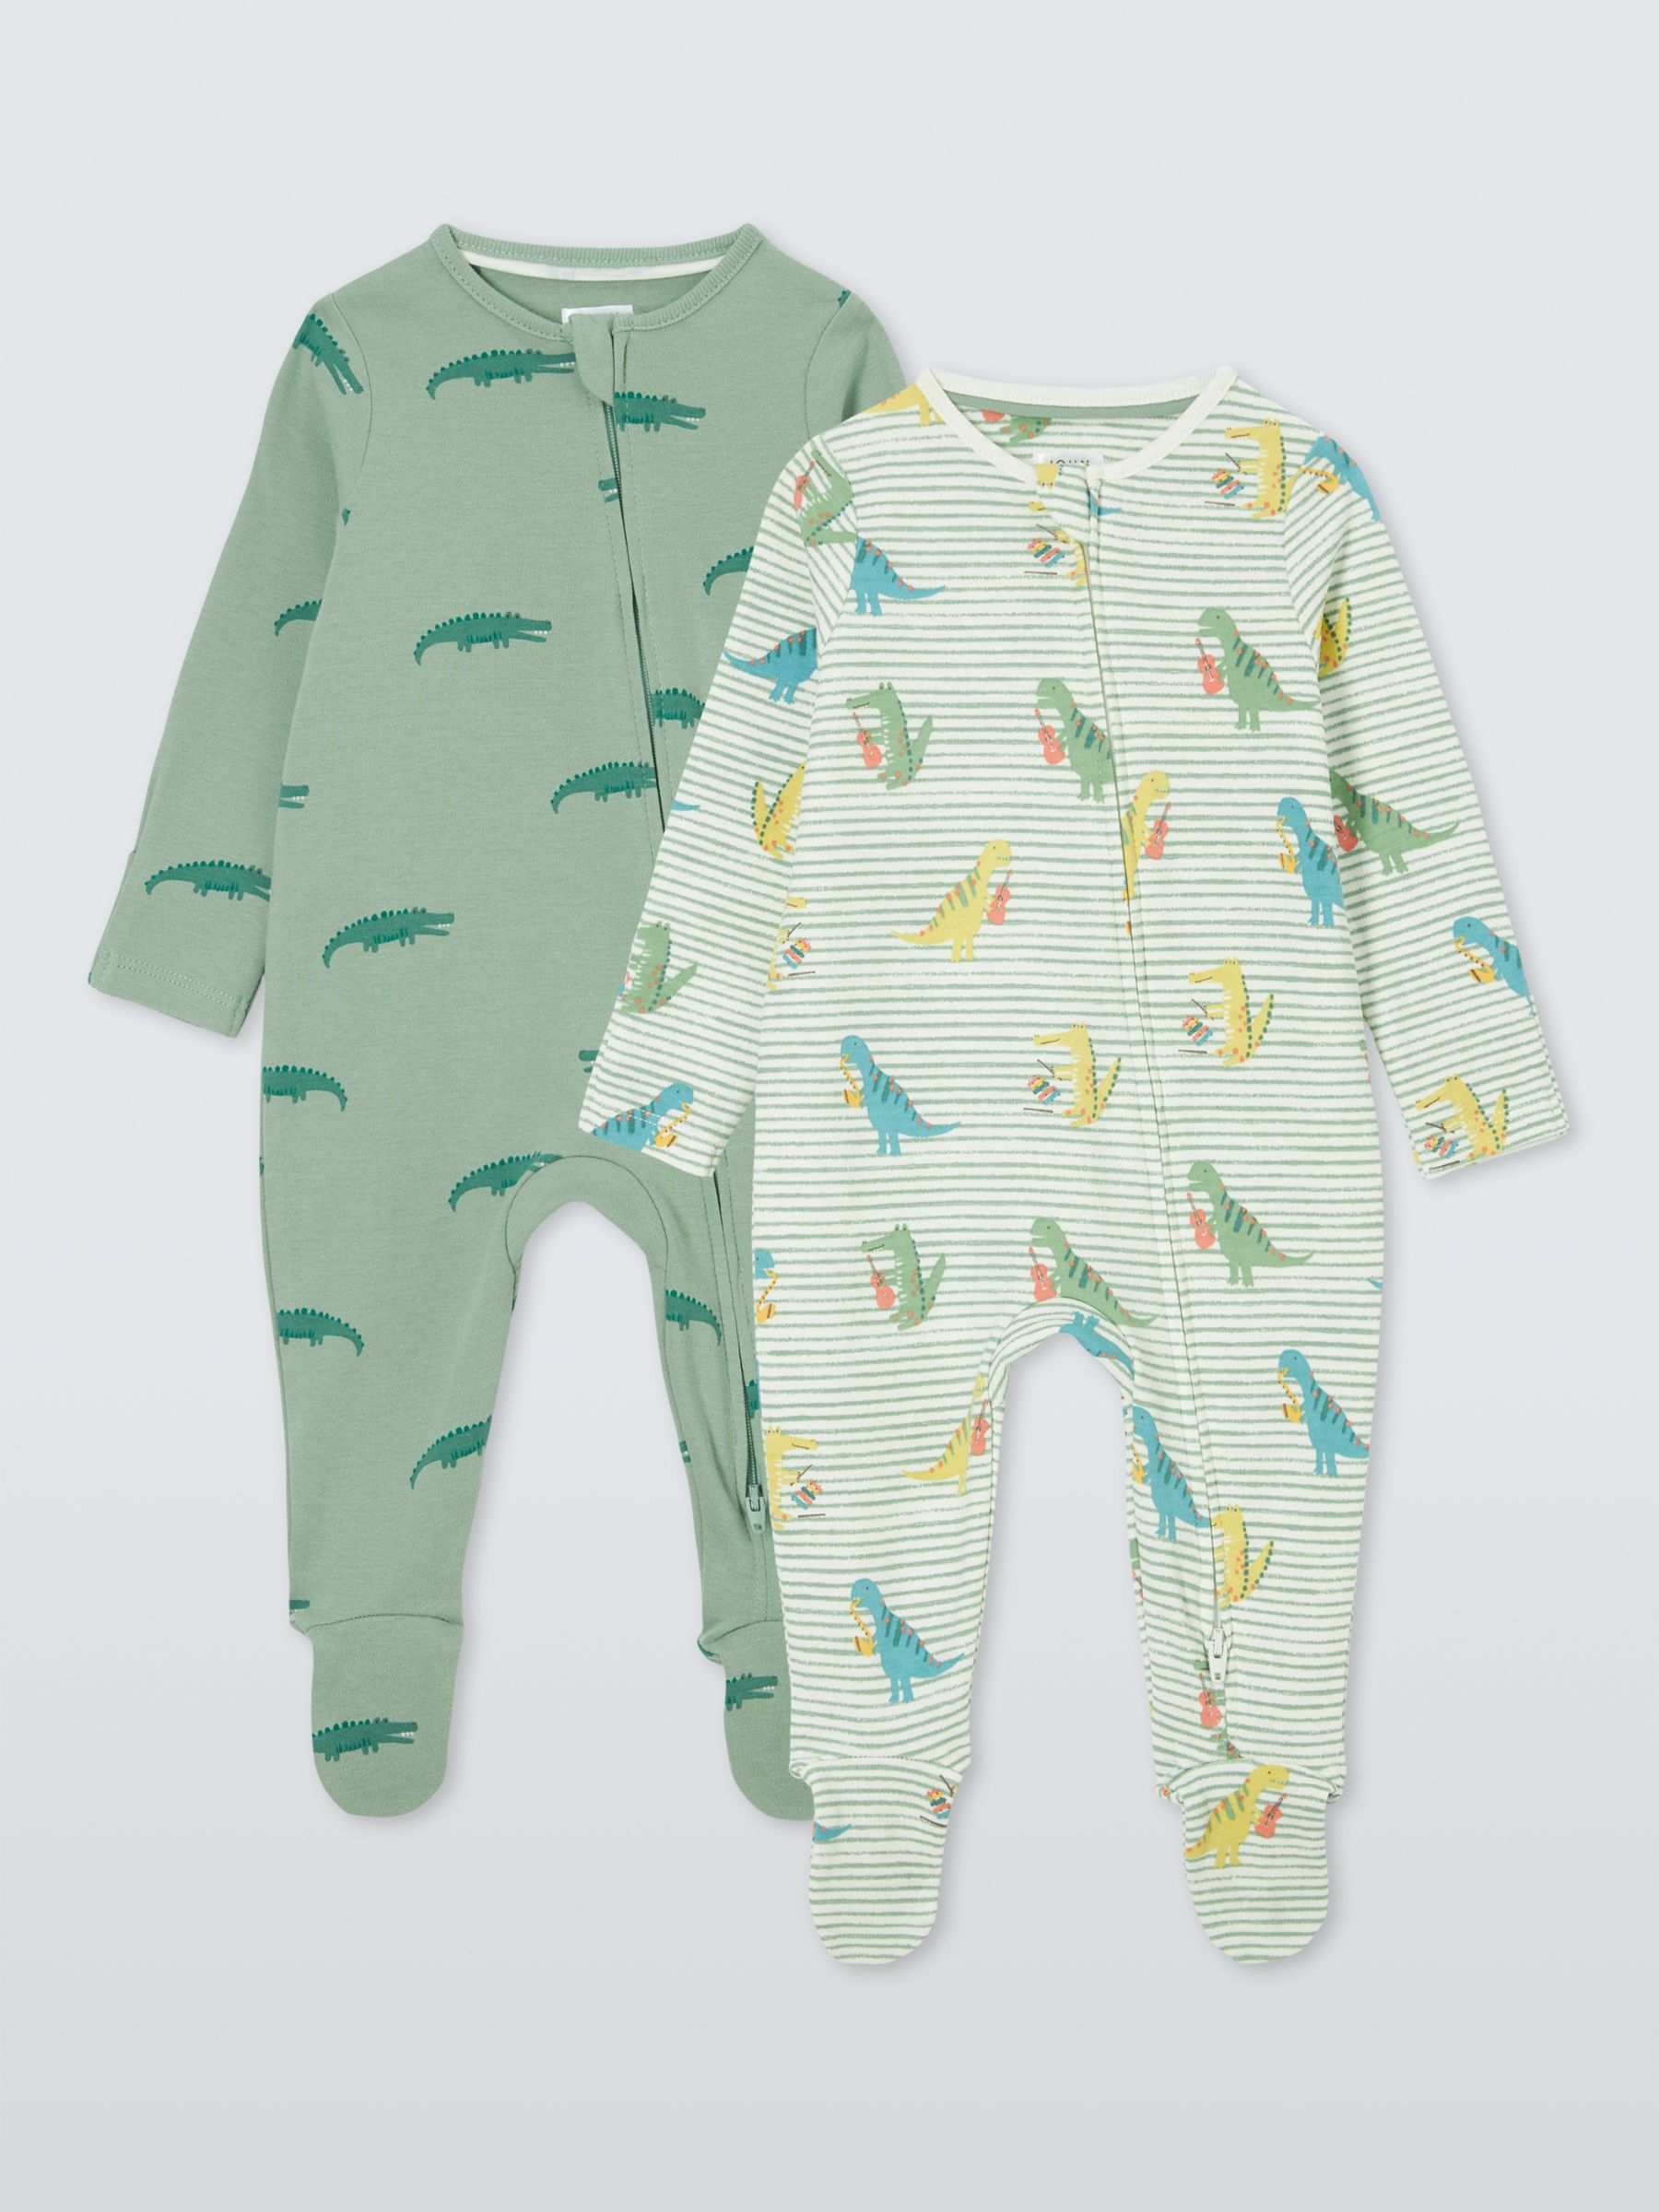 John Lewis Baby Crocodile & Dinosaurs Two Way Zip Sleepsuits, Pack of 2, Green, 6-9 months